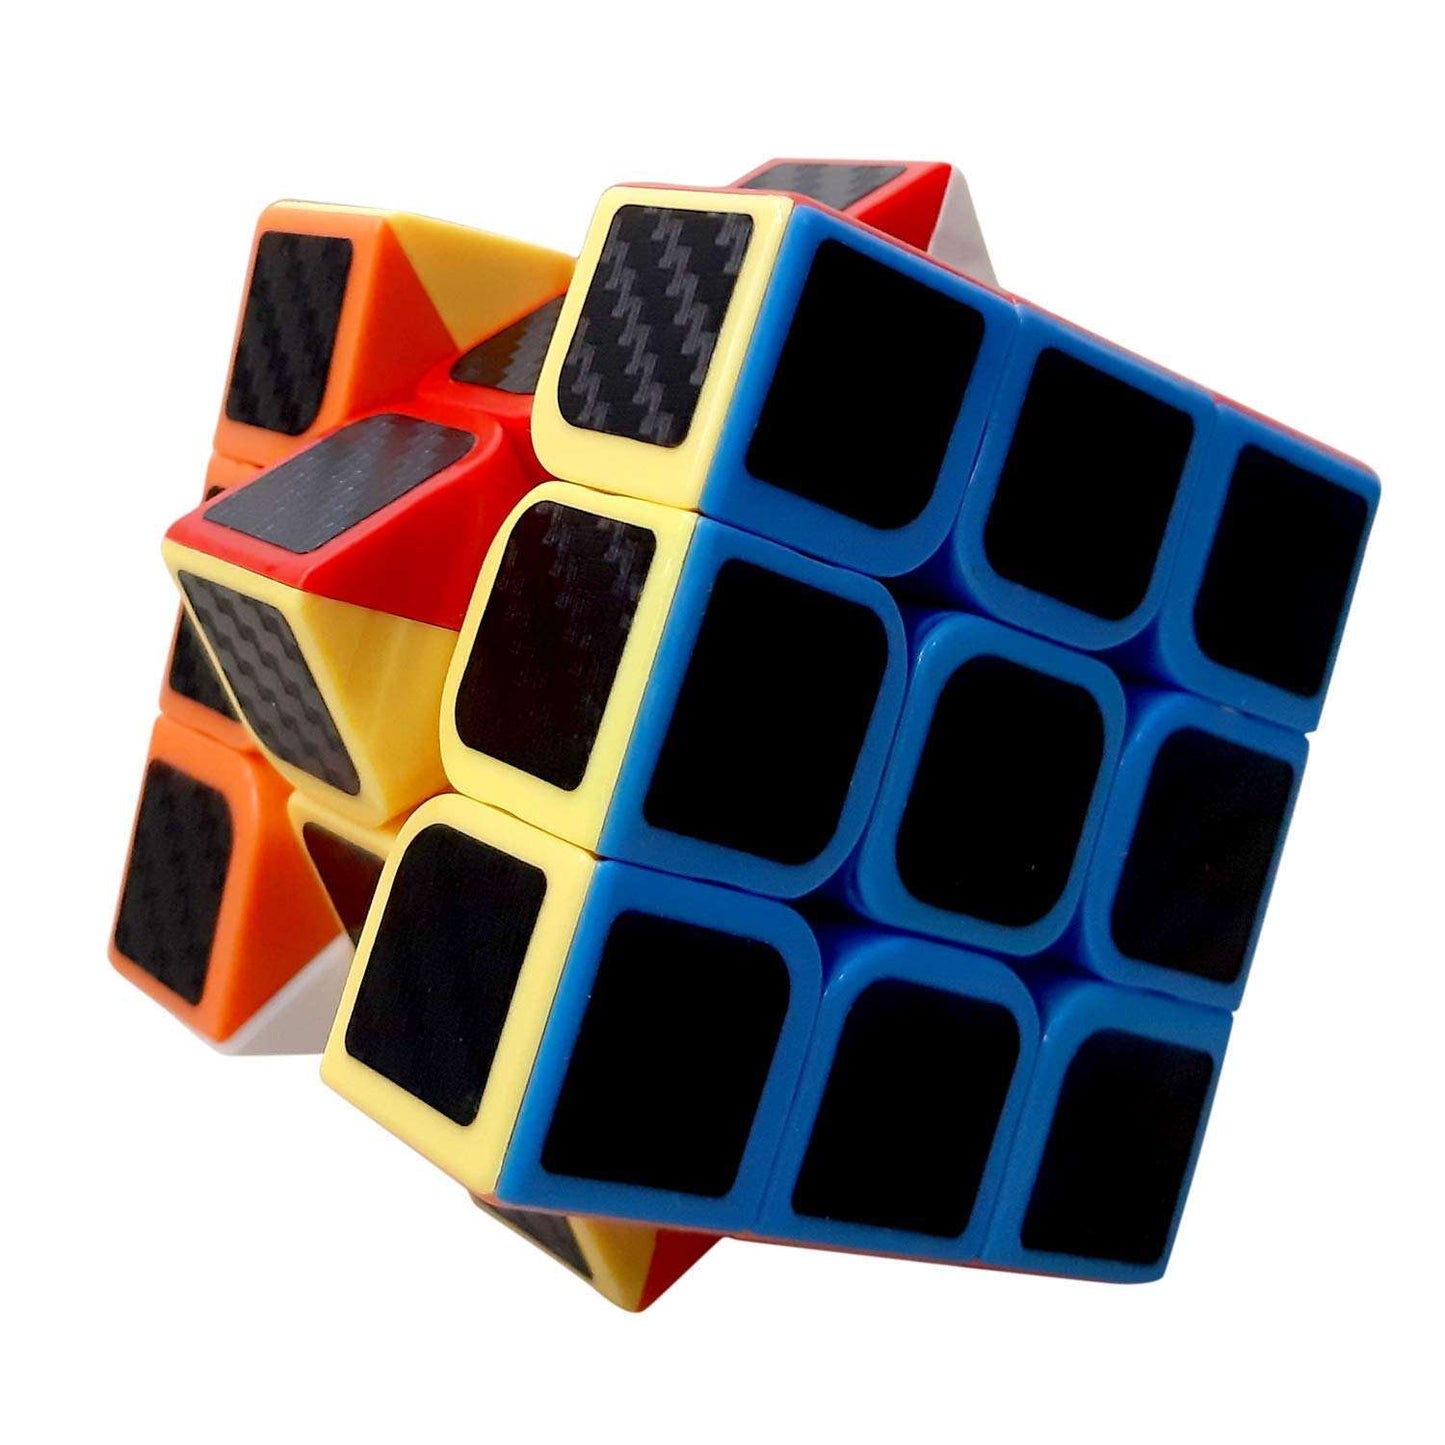 3x3 Neon Colors Magic Cube Puzzle Toy